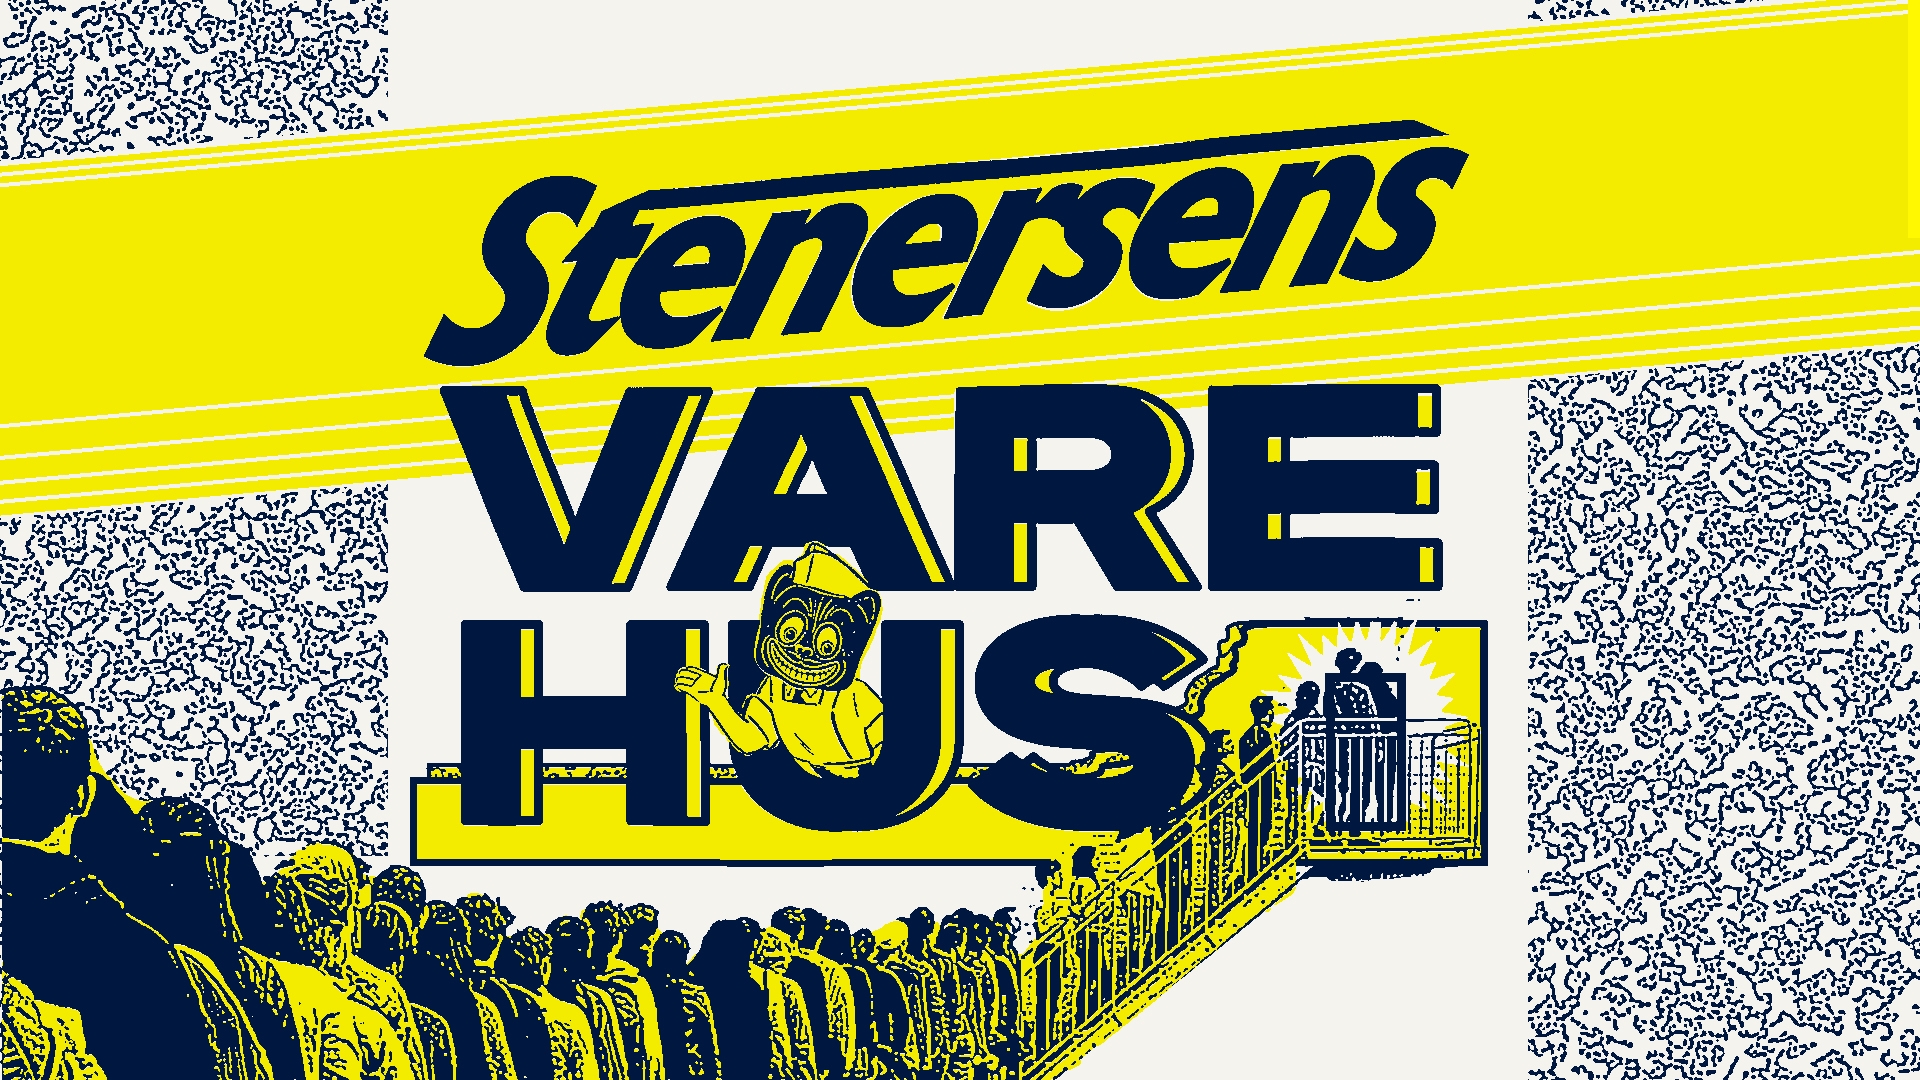 Stenersens Varehus